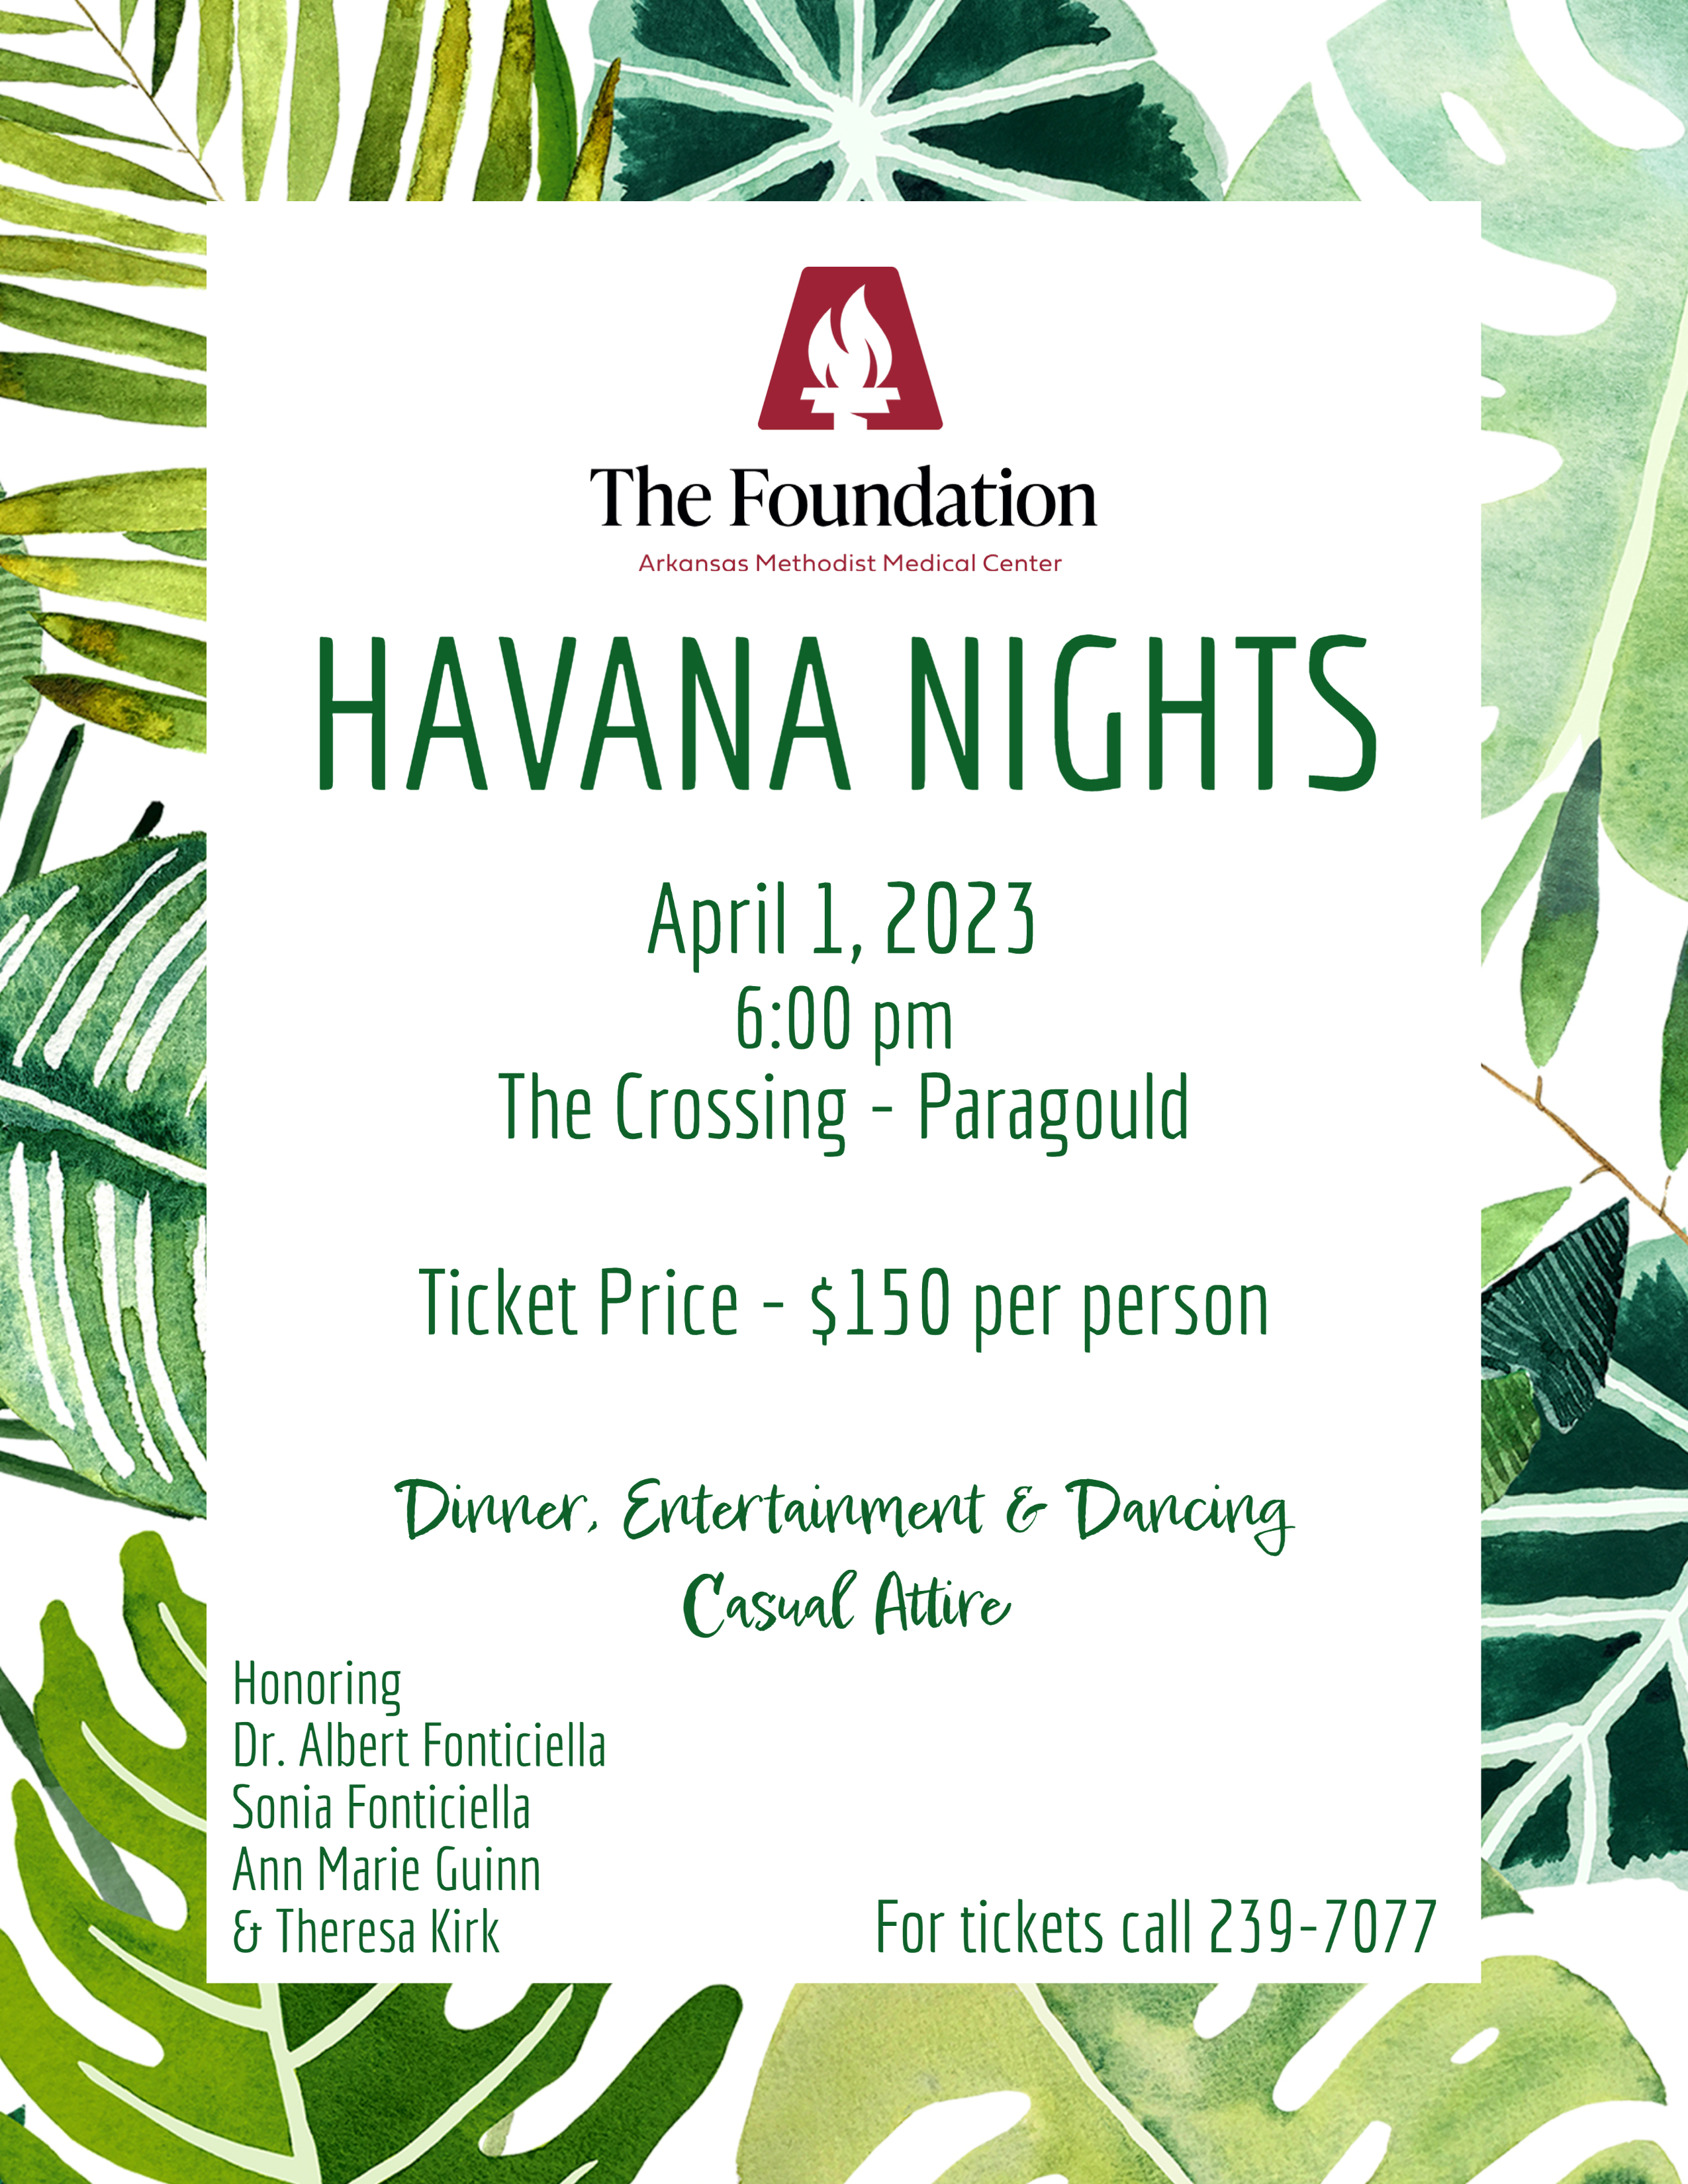 Havana nights flyer copy 1